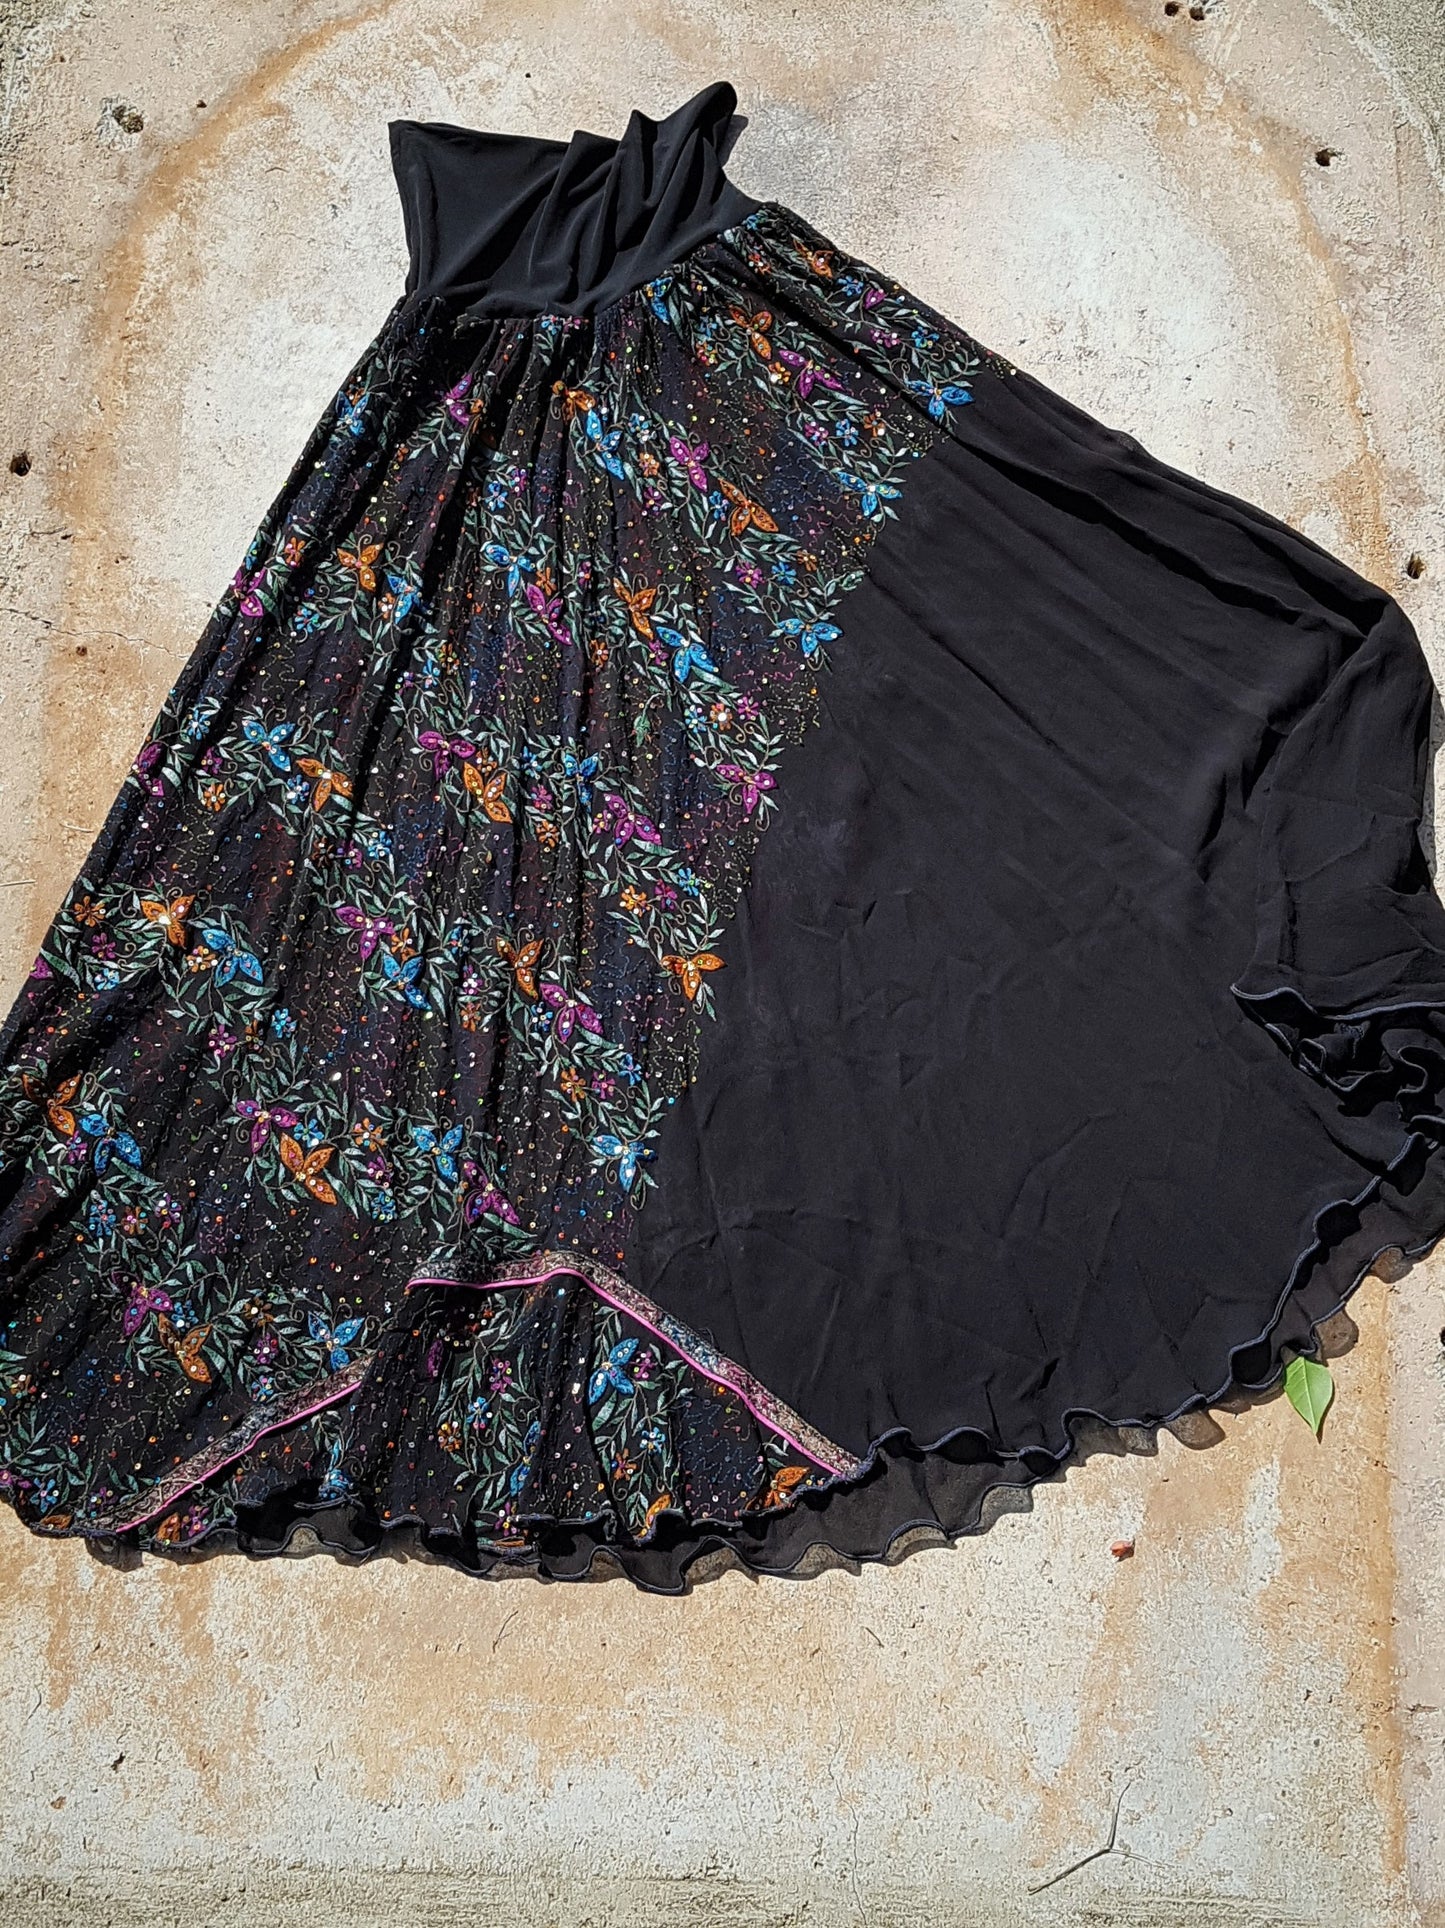 Back view black silk sari skirt in black